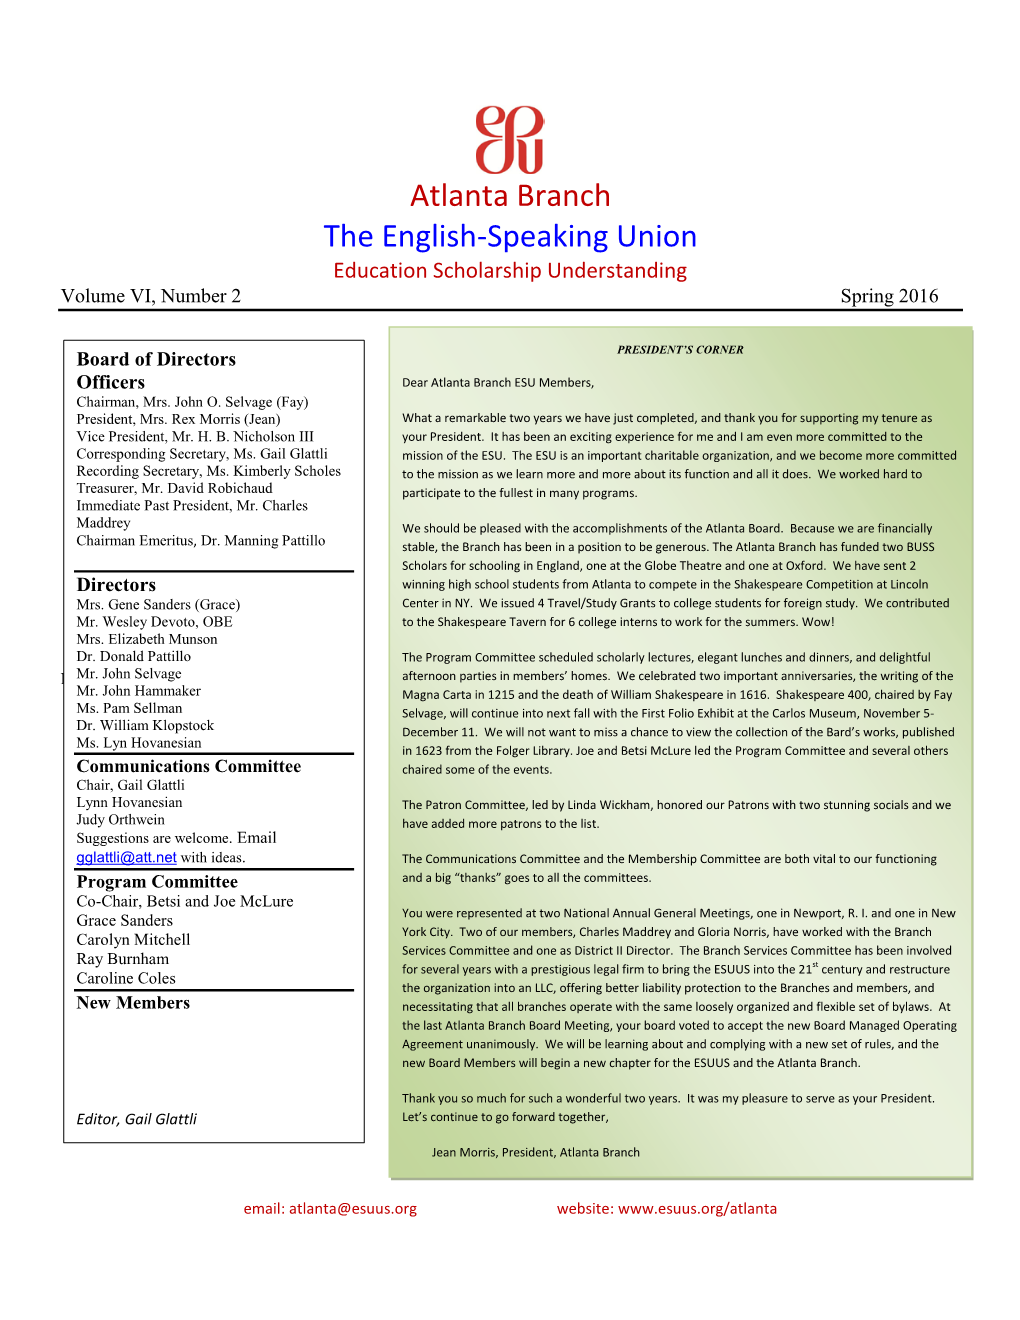 Atlanta Branch the English-Speaking Union Education Scholarship Understanding Volume VI, Number 2 Spring 2016